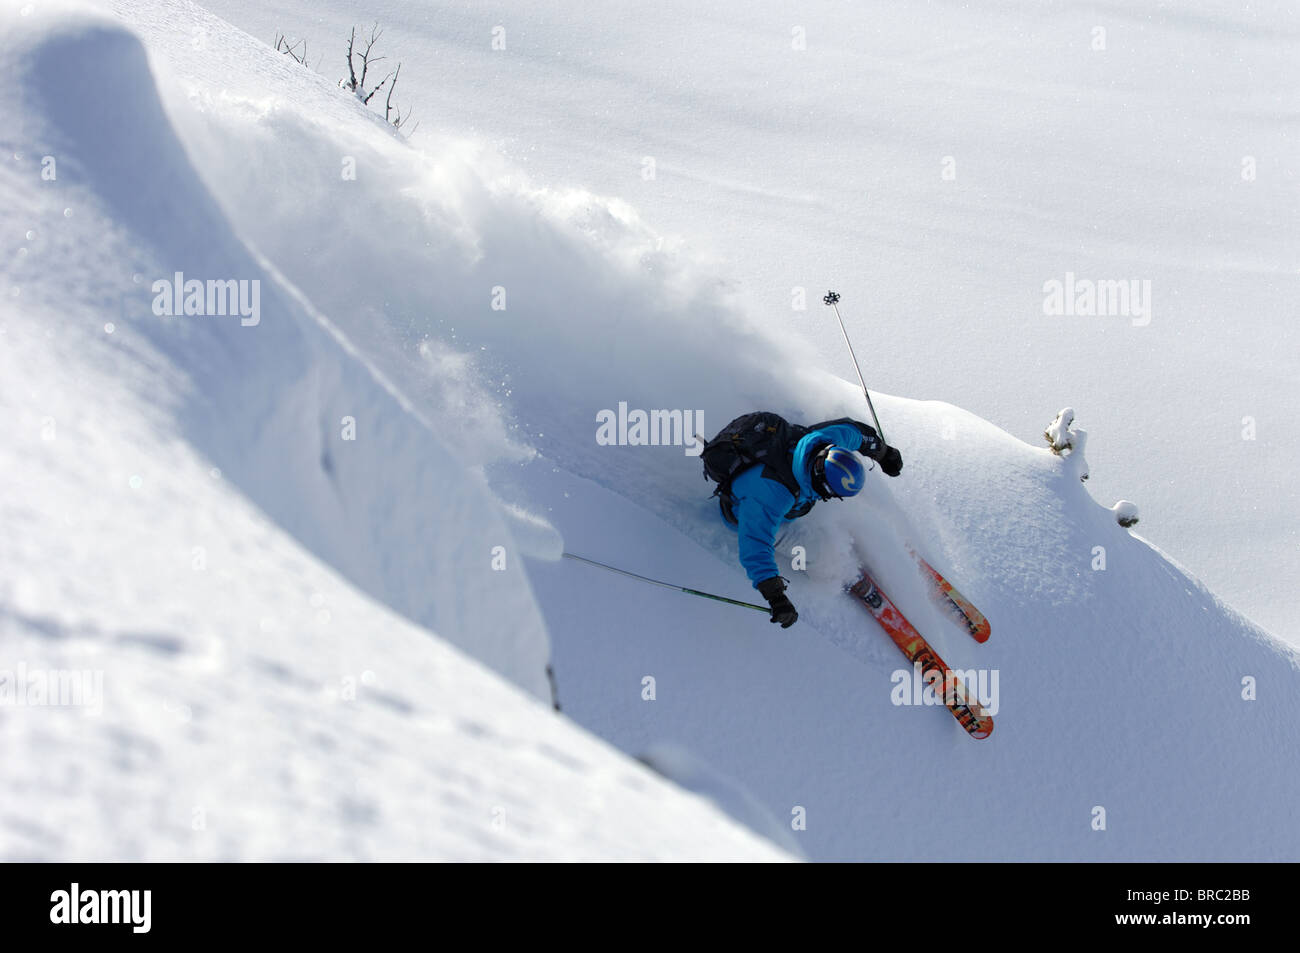 Skier turning fast in deep powder snow Stock Photo